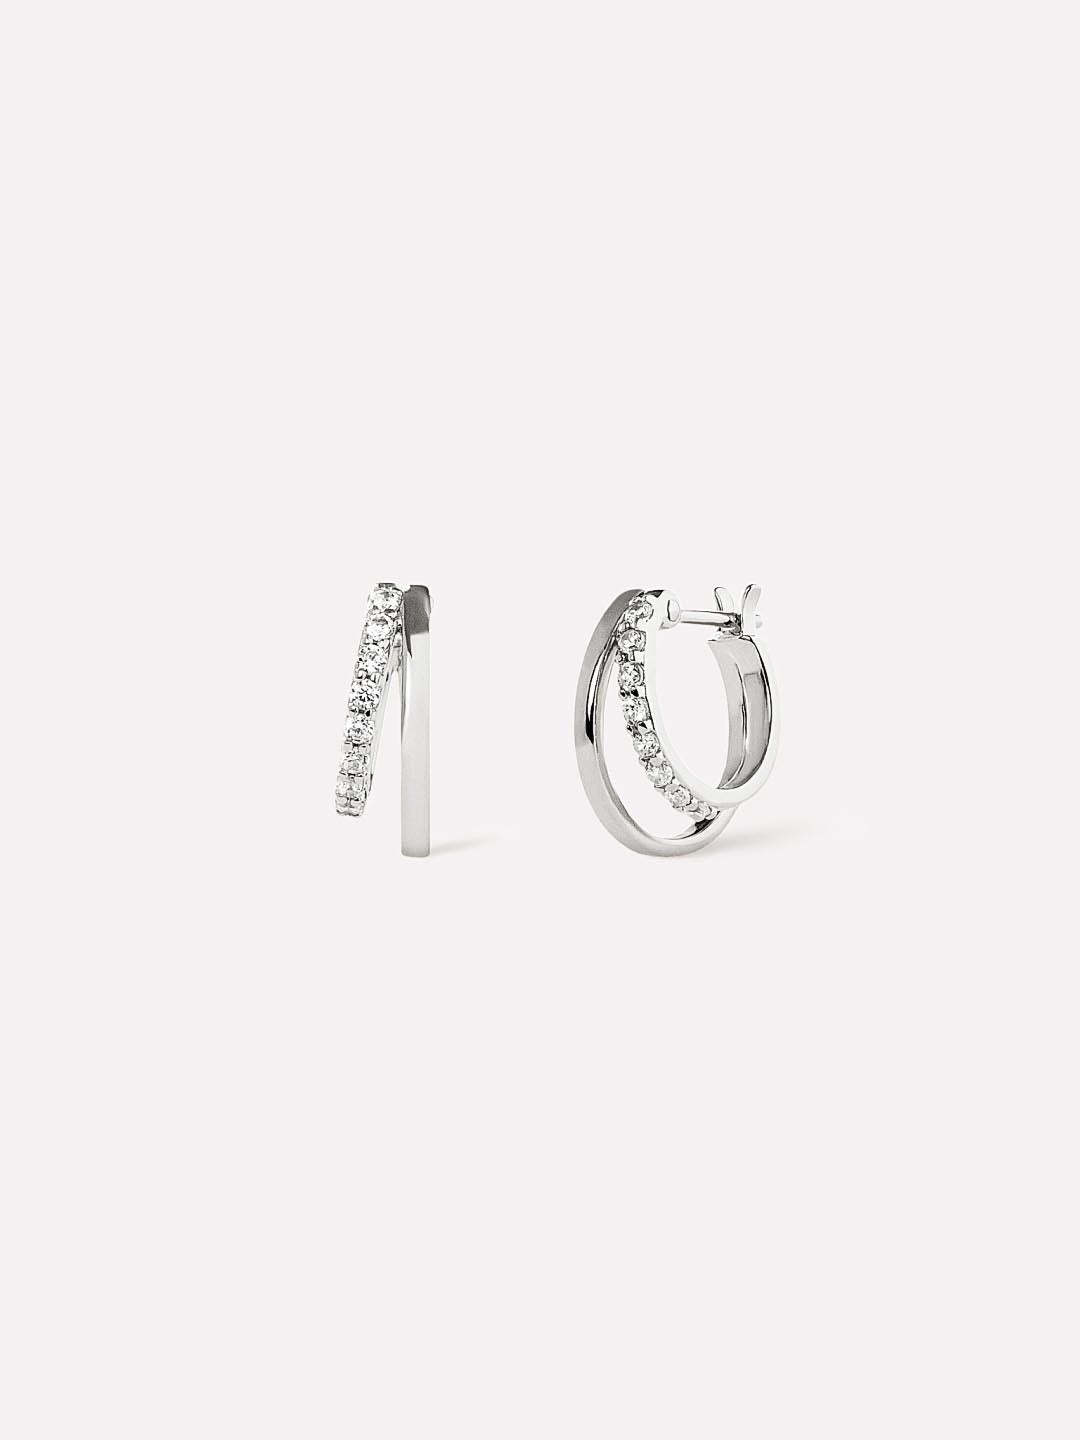 Double Hoop Earrings - Toda Silver, Ana Luisa